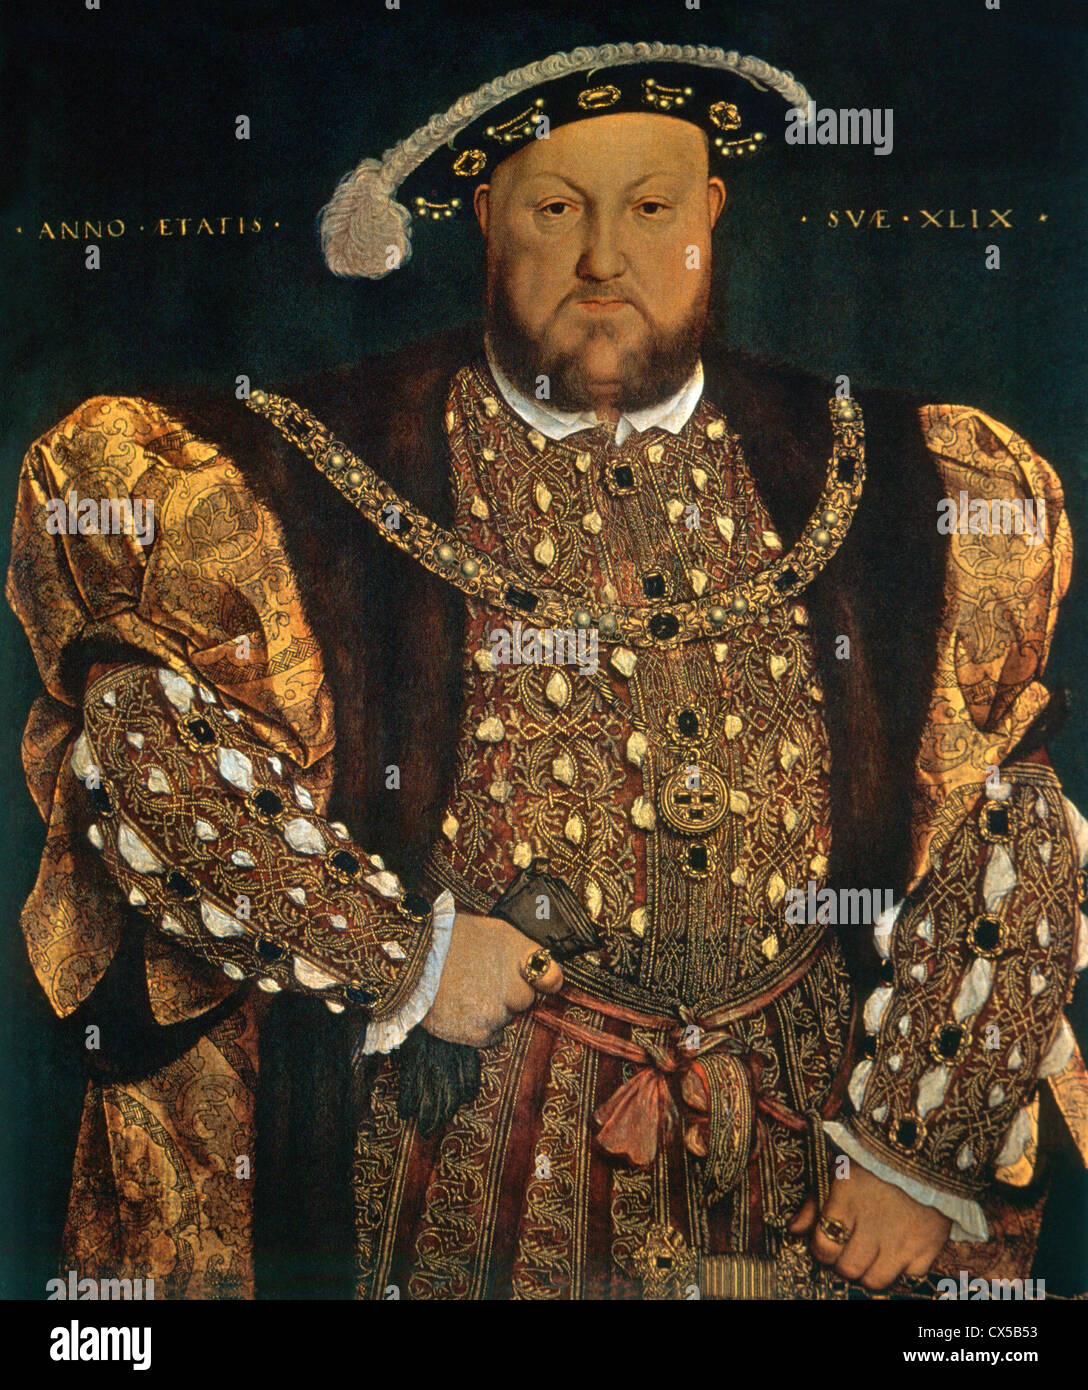 Henry VIII, King of England, 1509-1547, Portrait Stock Photo